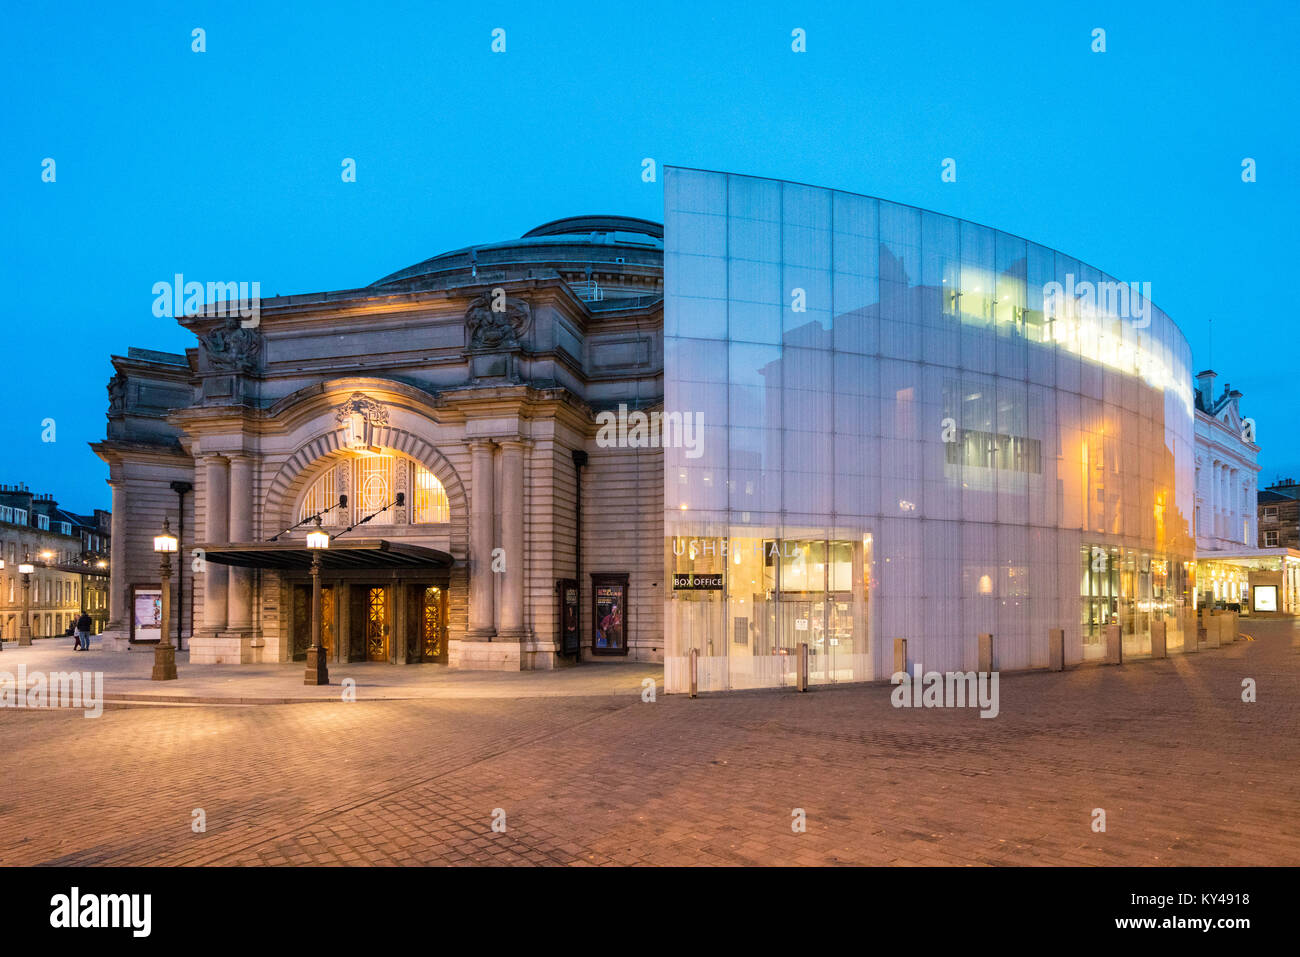 Night view of exterior of Usher Hall theatre in Edinburgh, Scotland, United Kingdom Stock Photo